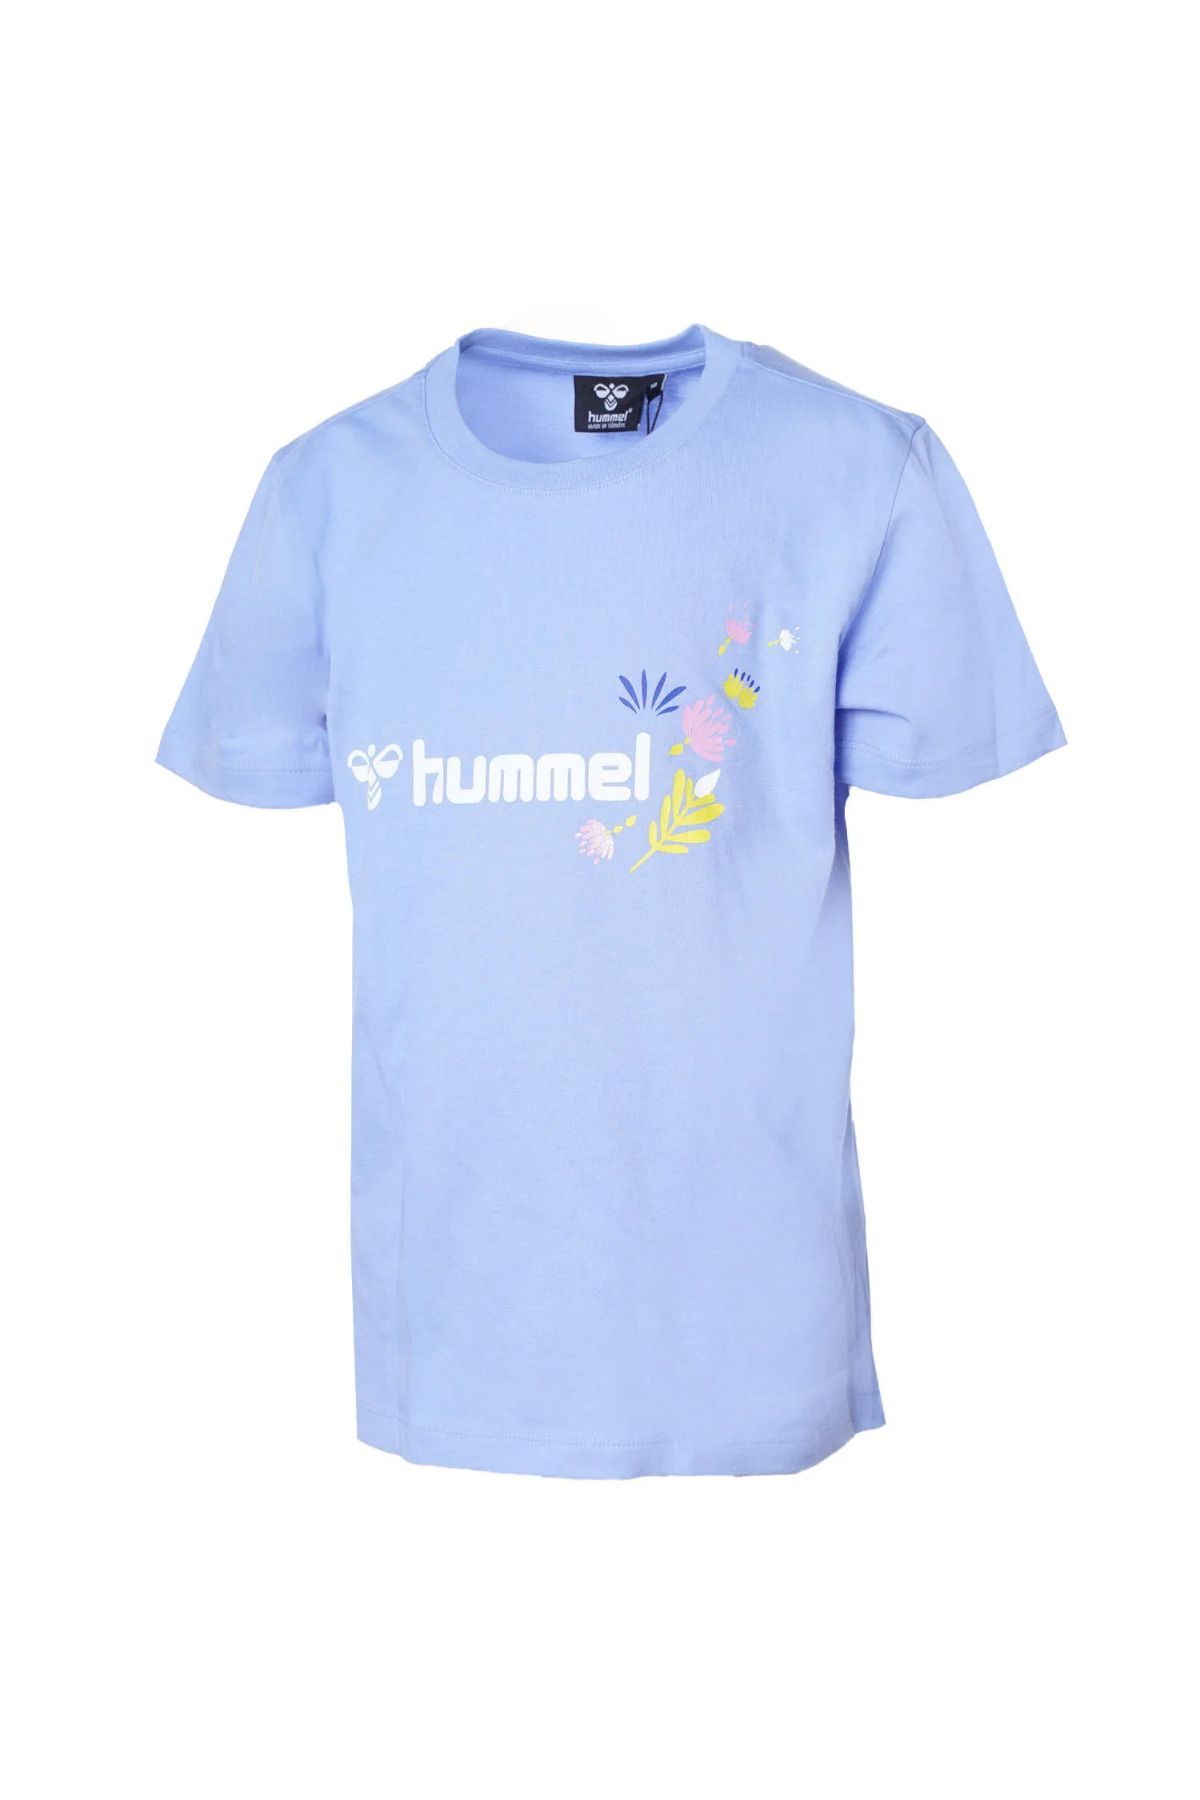 hummel Colby Girl Collar Round t -shirt